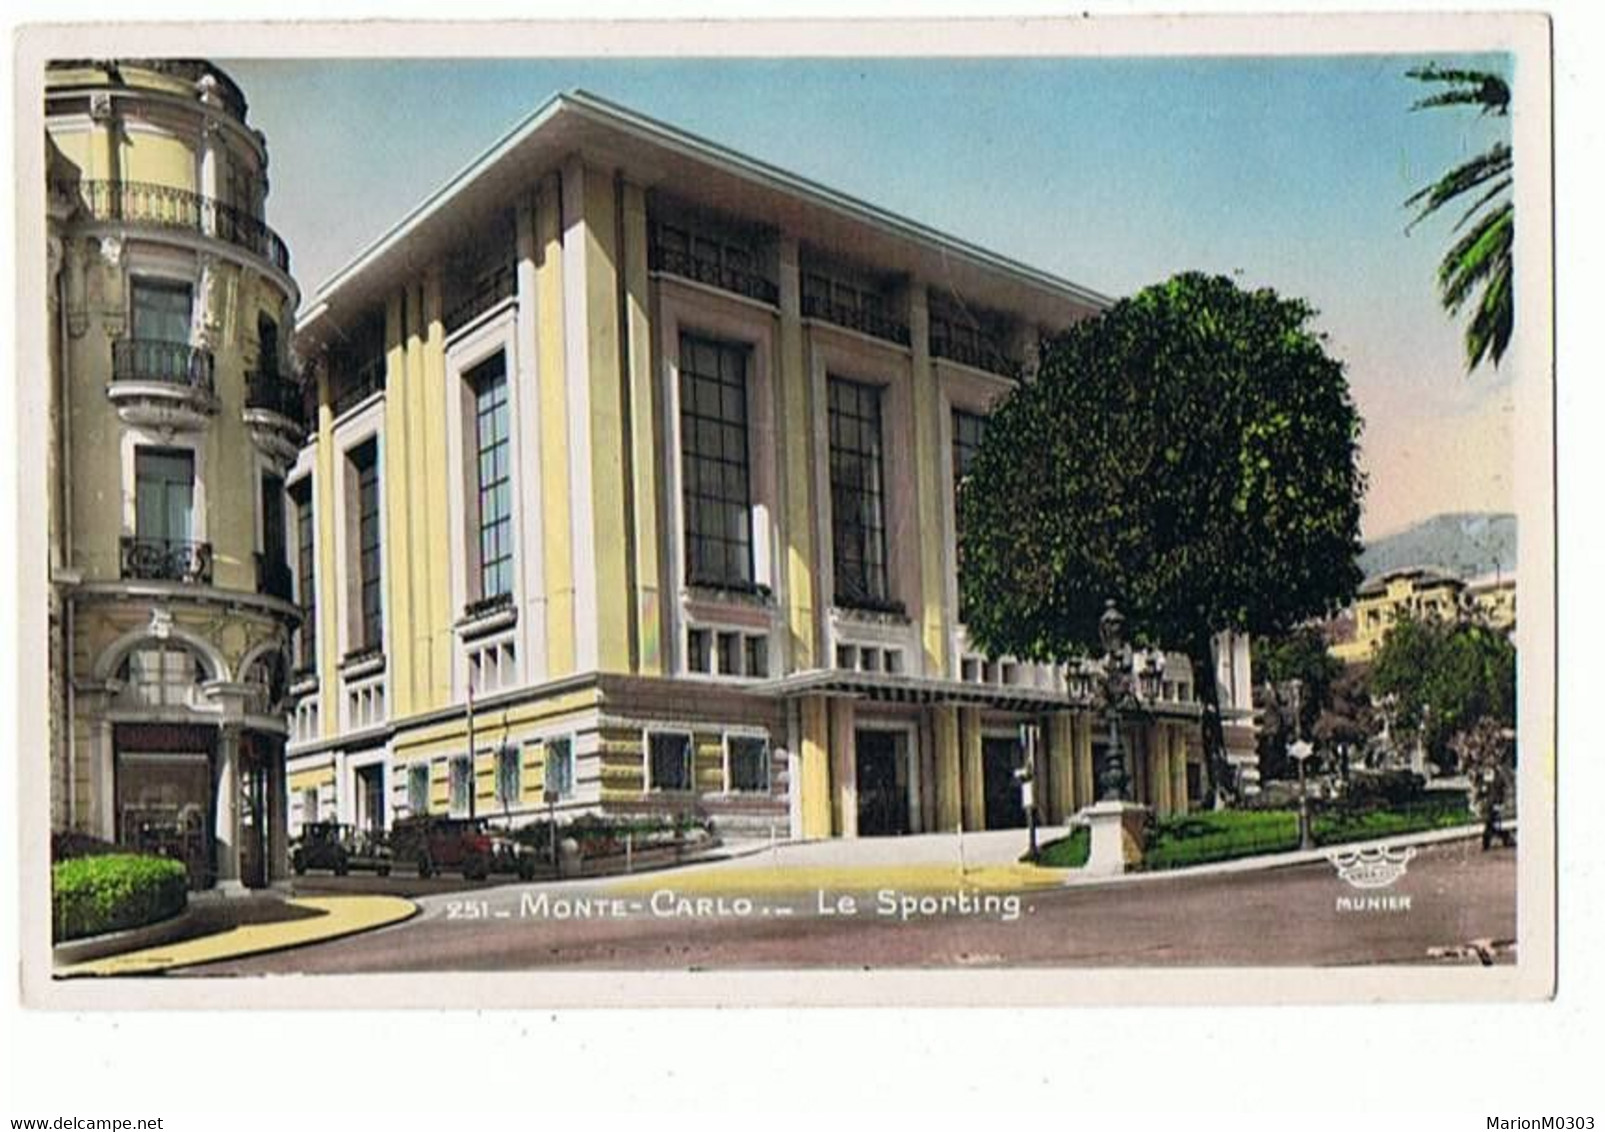 MONACO - Monte Carlo, Le Sporting - 214 - Opéra & Théâtre